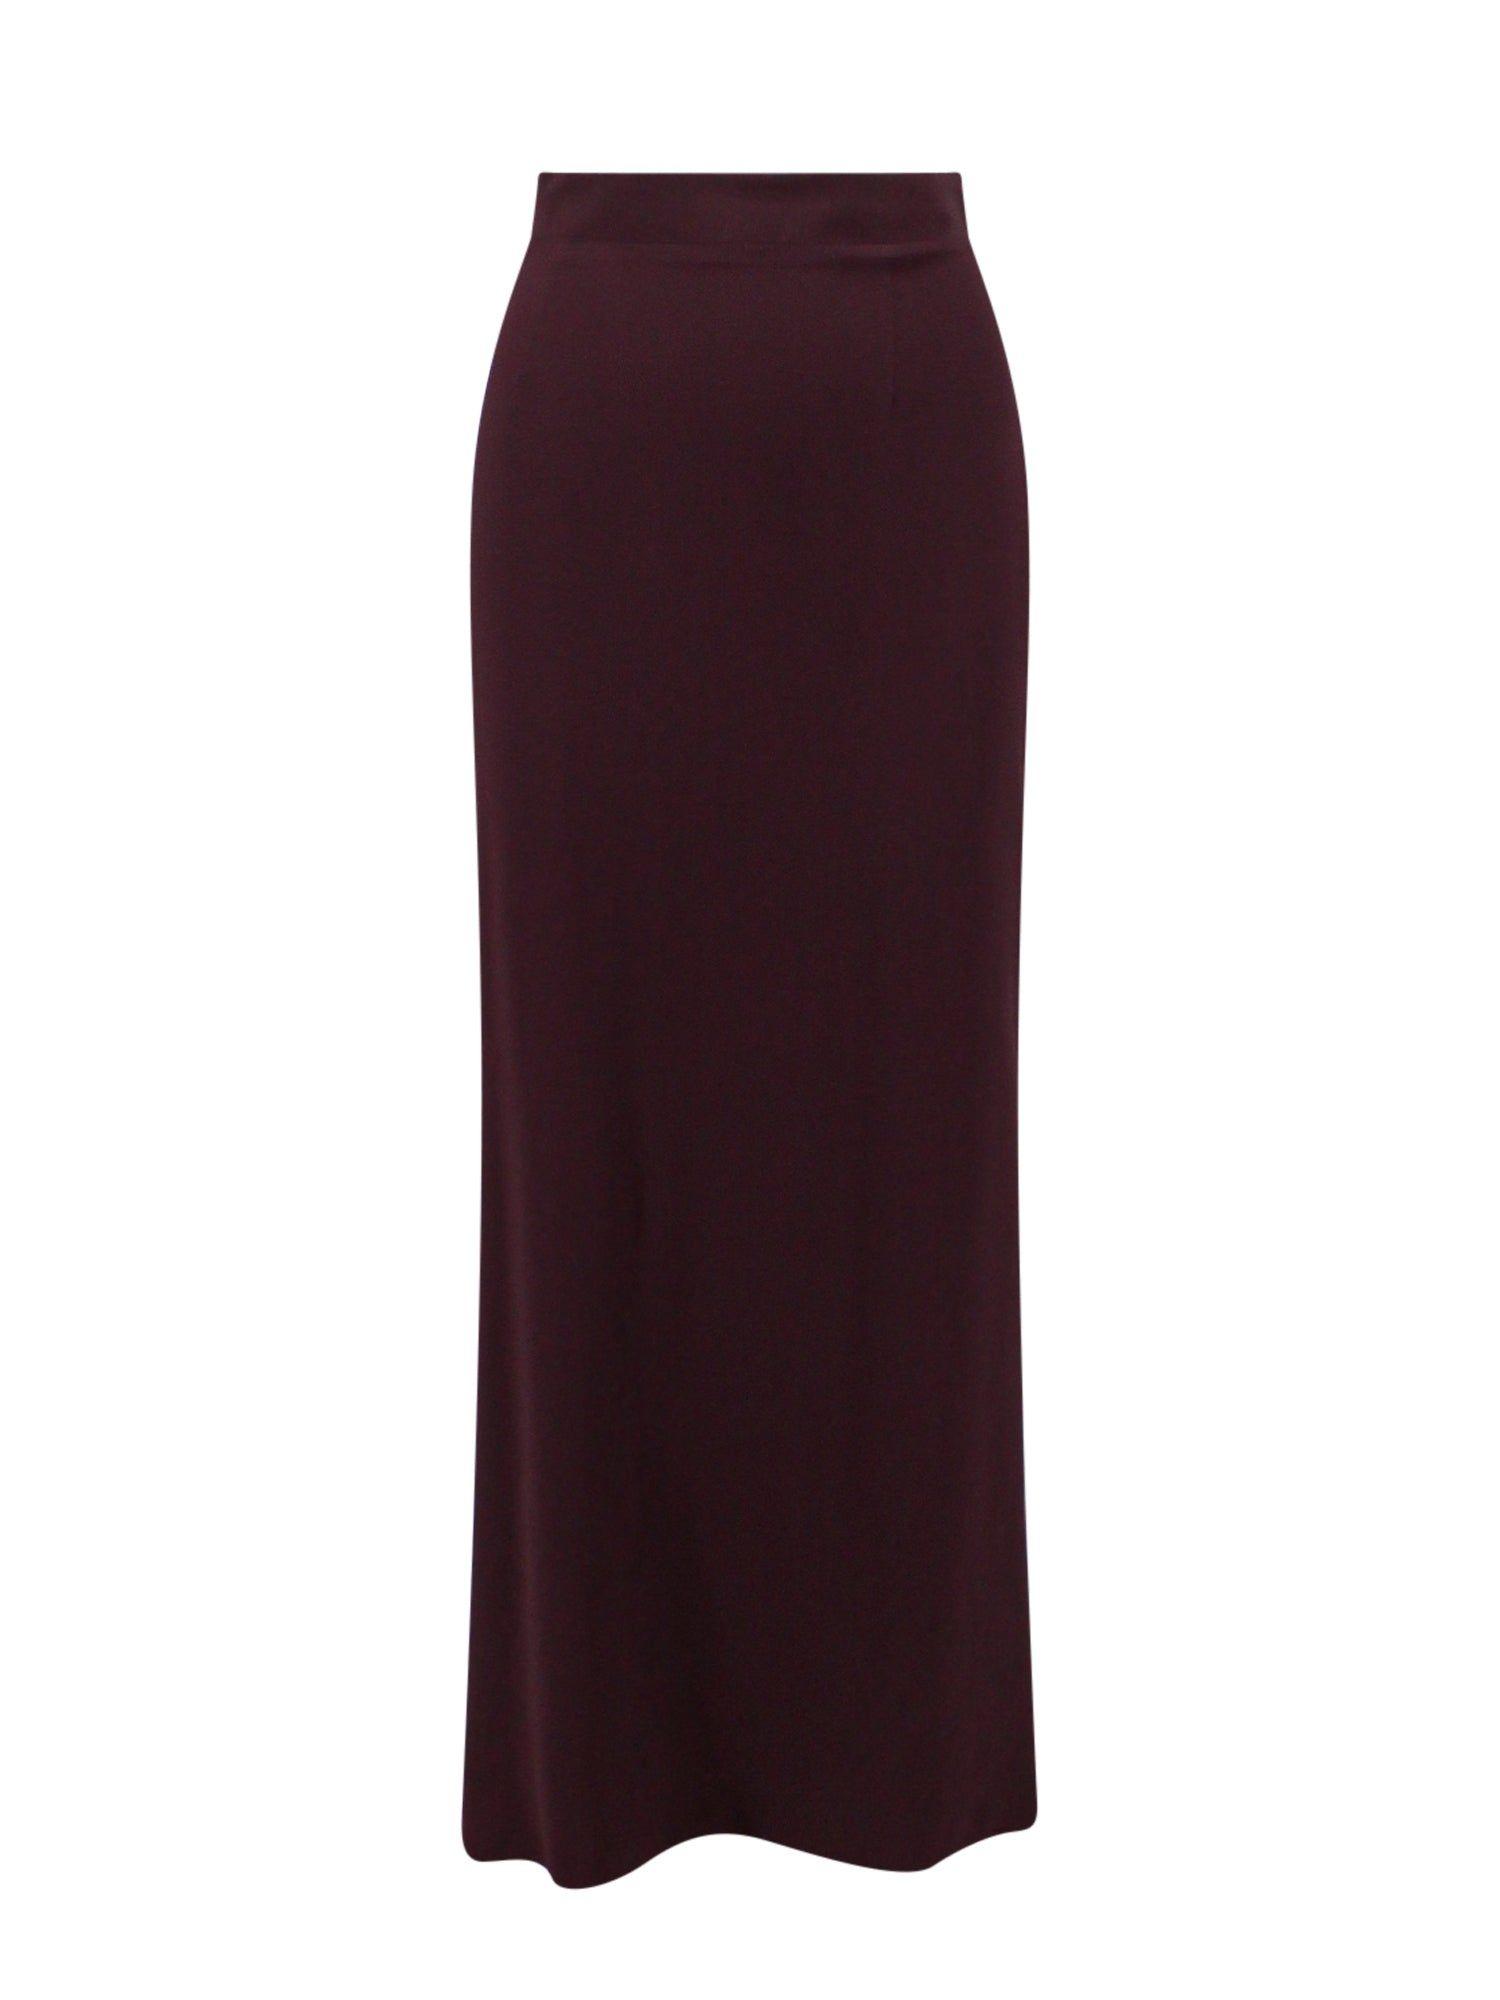 Erika Cavallini Semi Couture Acetate Skirt in Purple | Lyst